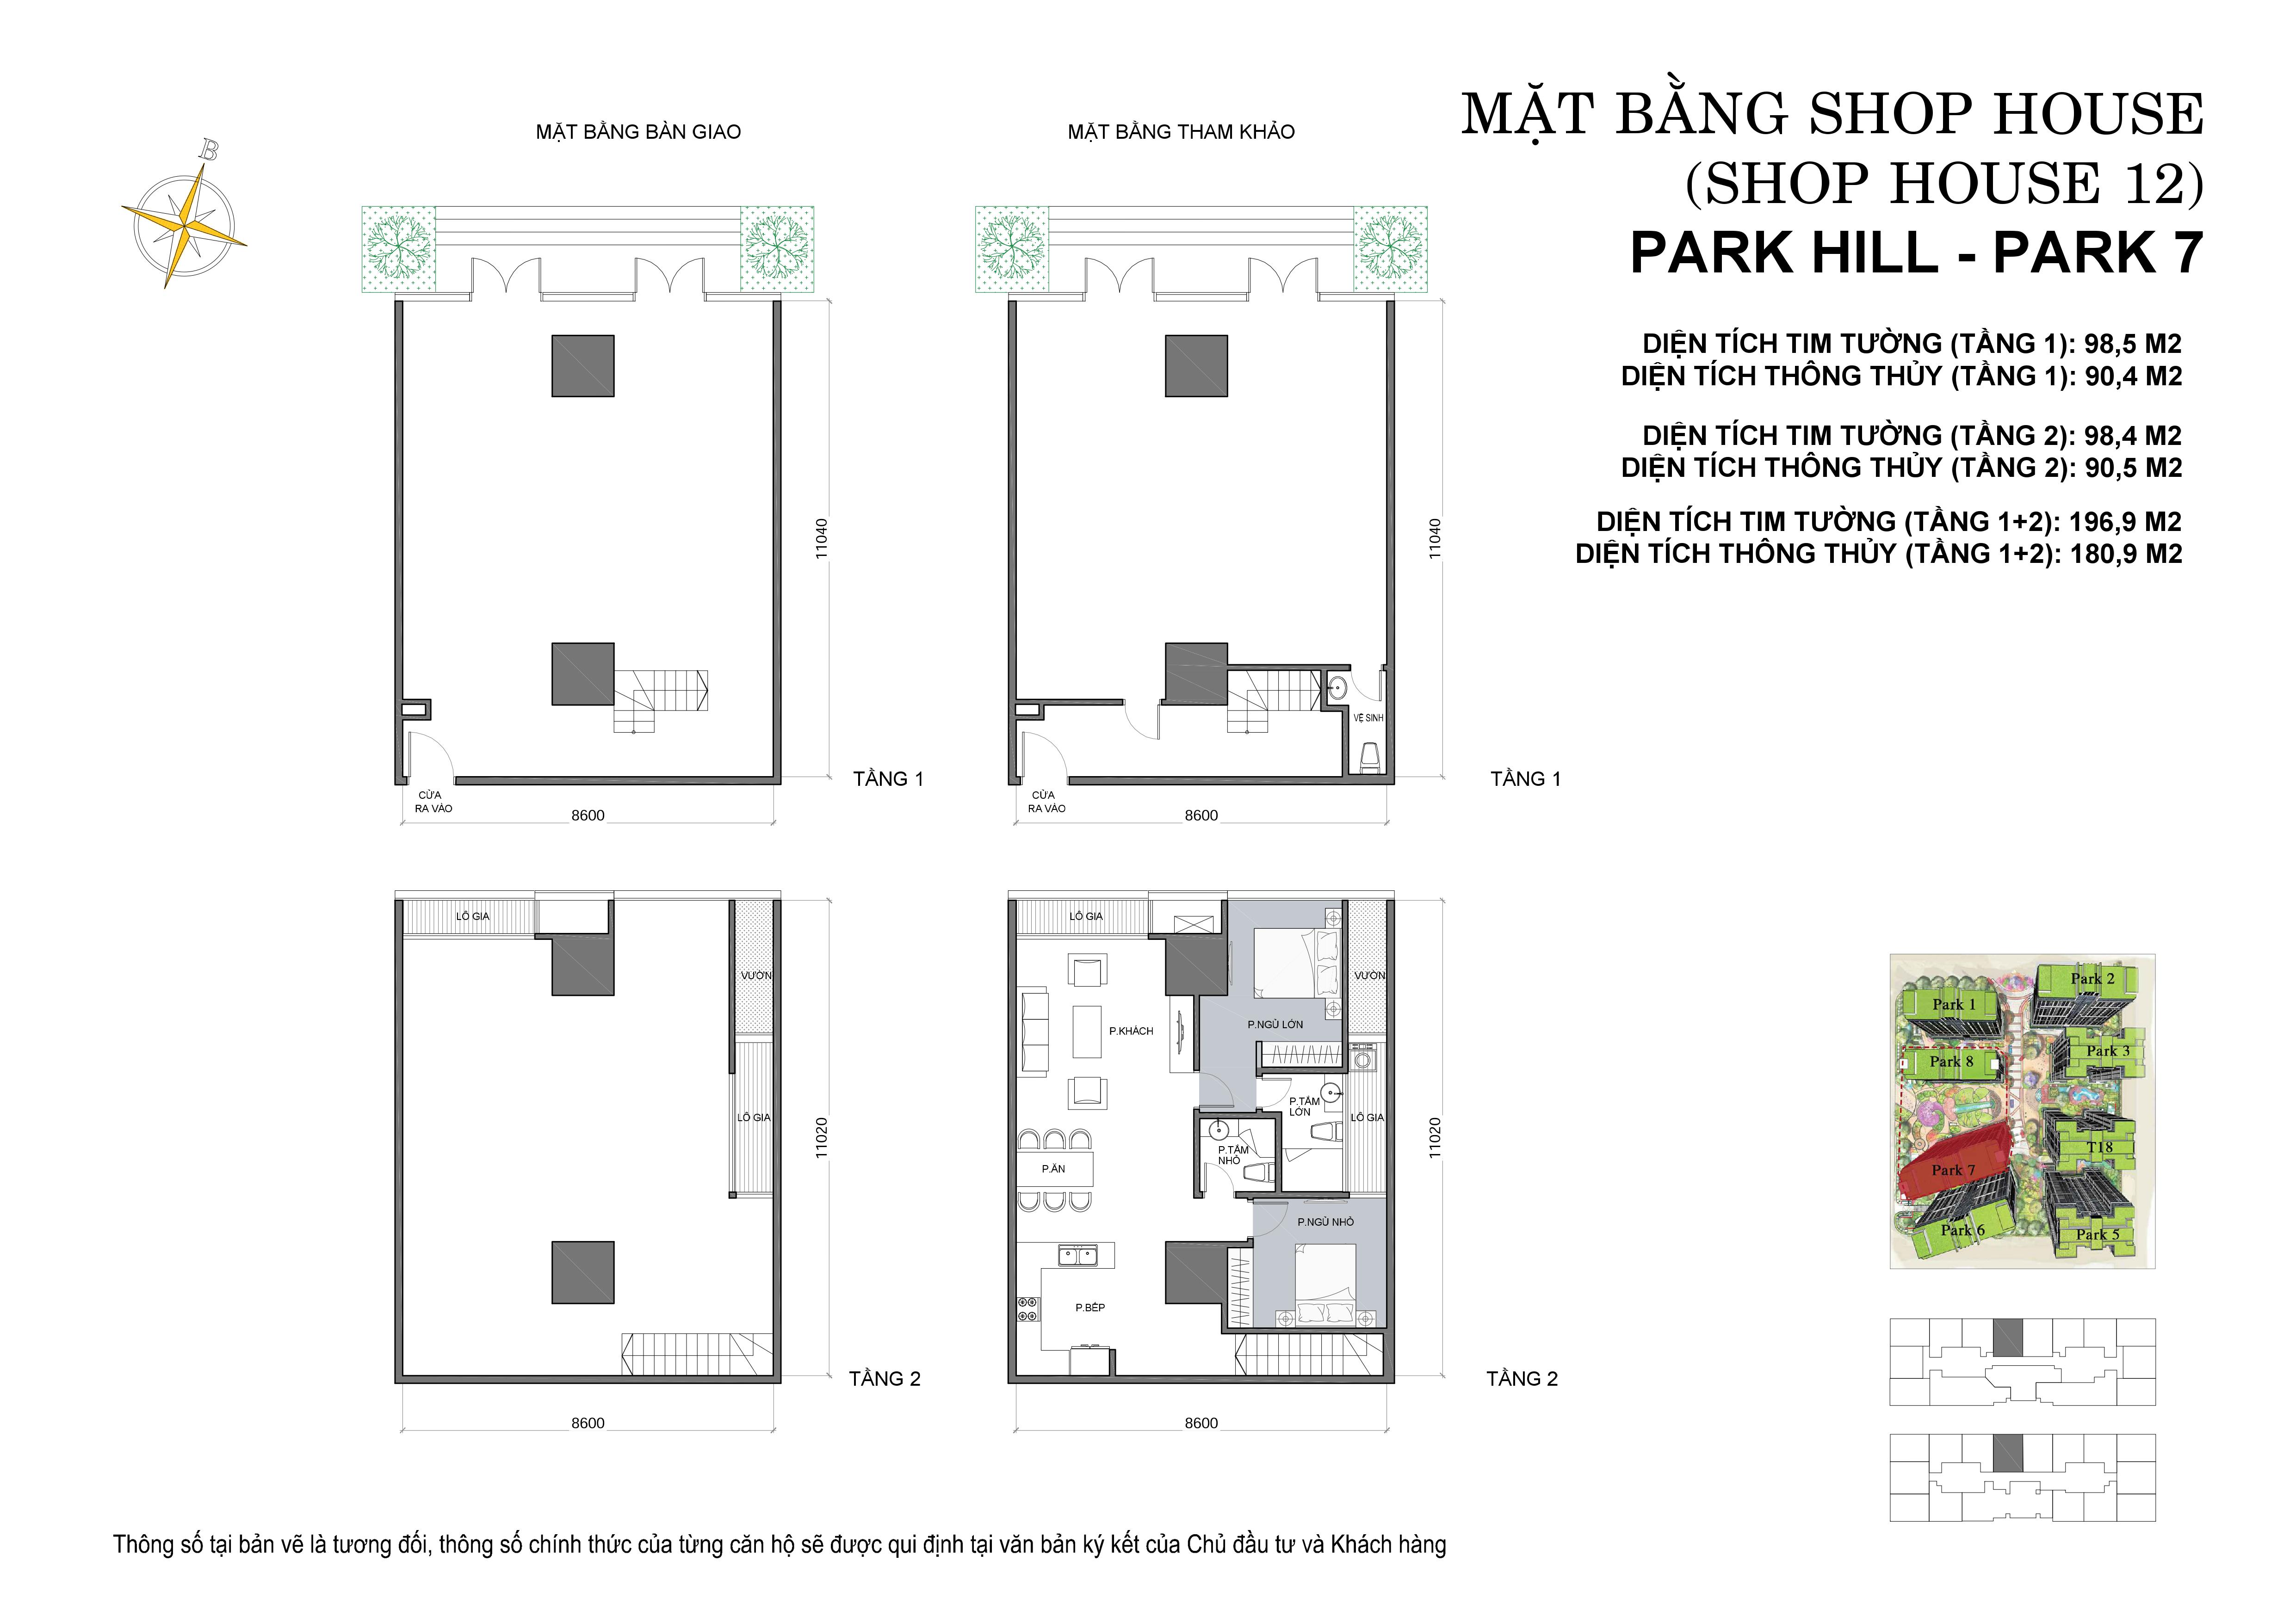 Park 7 - Shophouse căn số 12 mặt bằng chi tiết